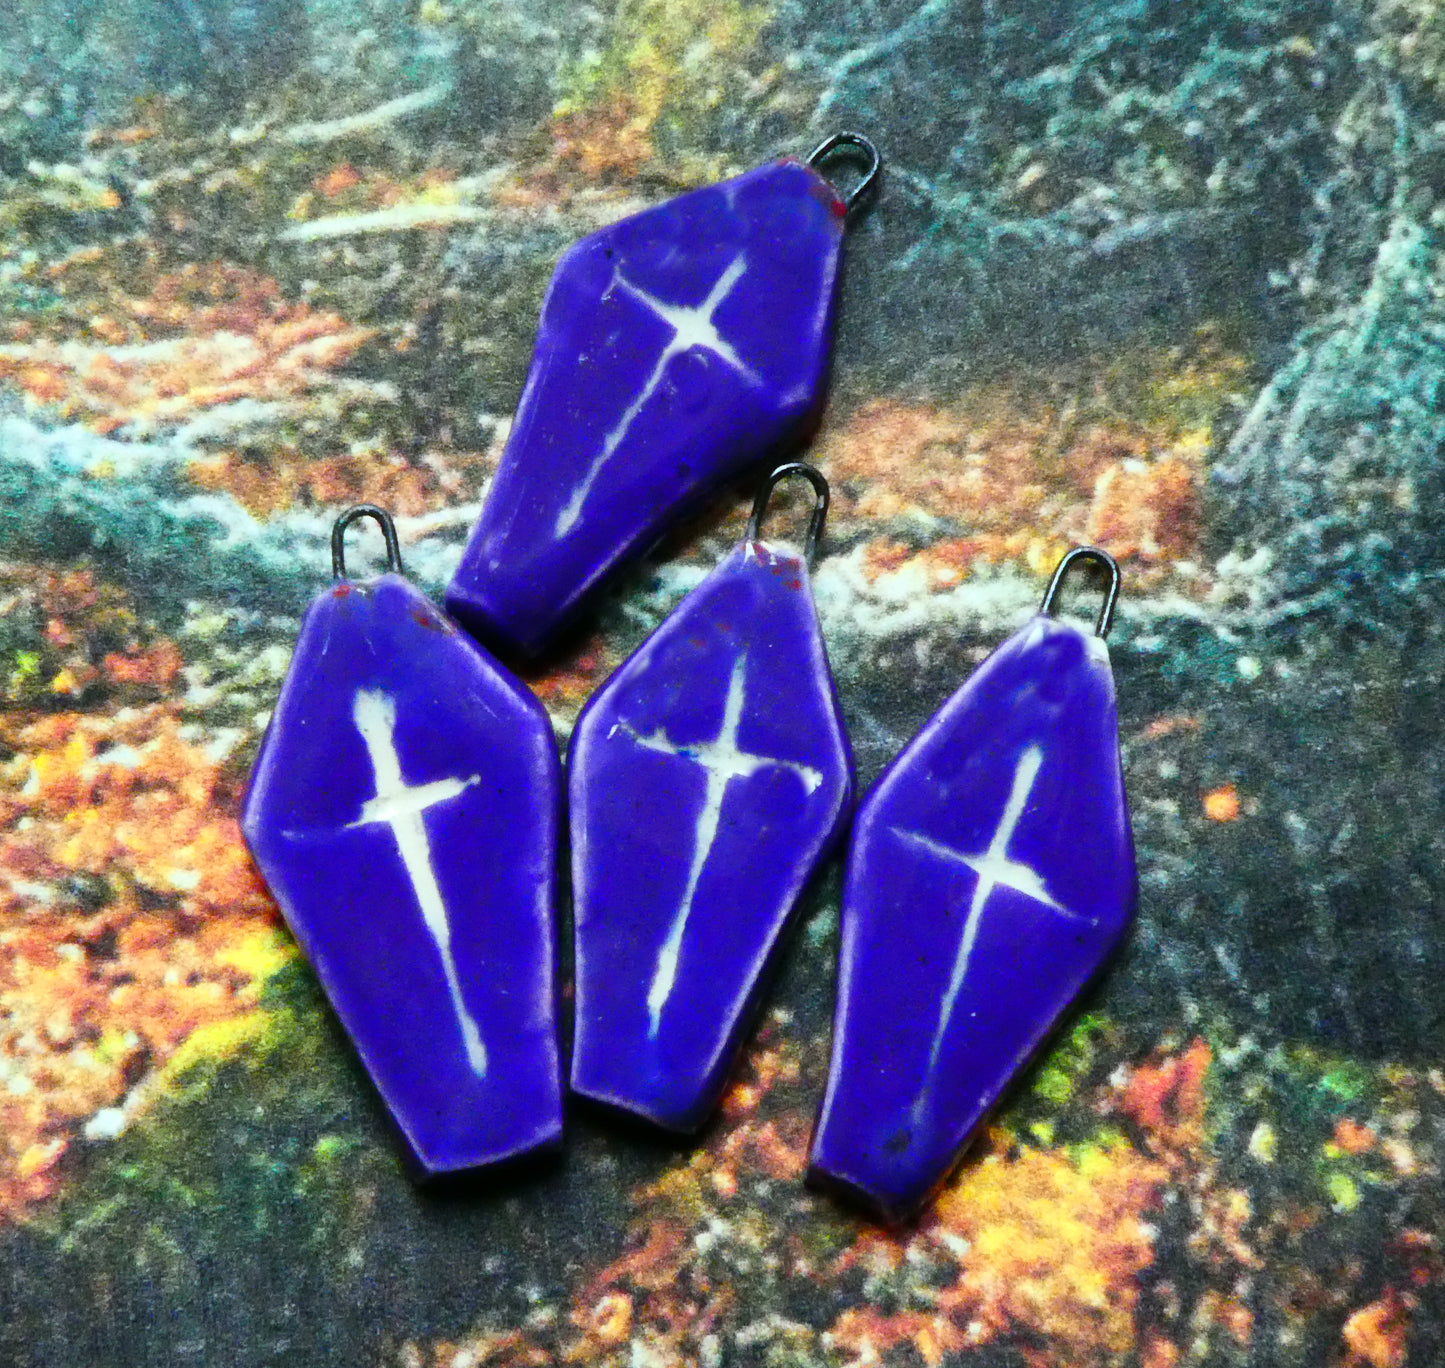 Ceramic Coffin Earring Charms - Dark Purple